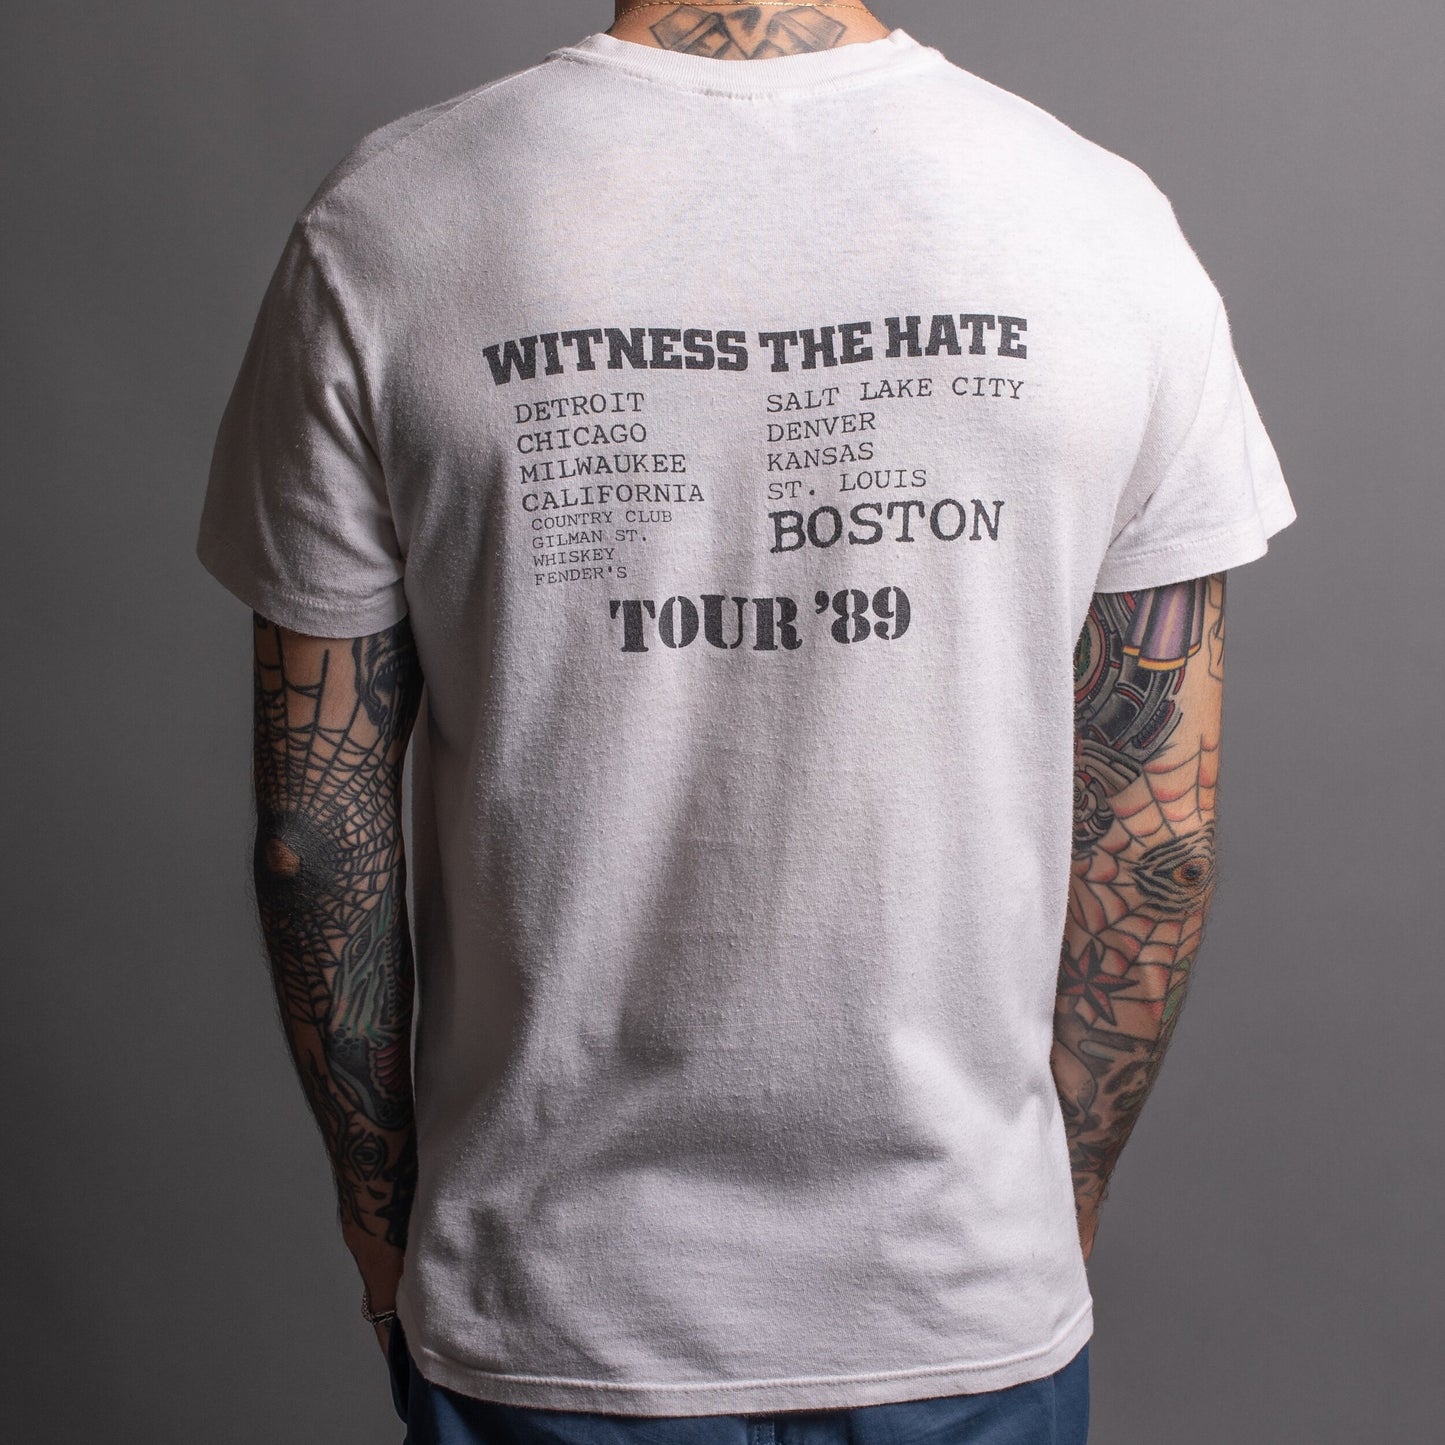 Vintage 1989 Slapshot Witness The Hate Tour T-Shirt